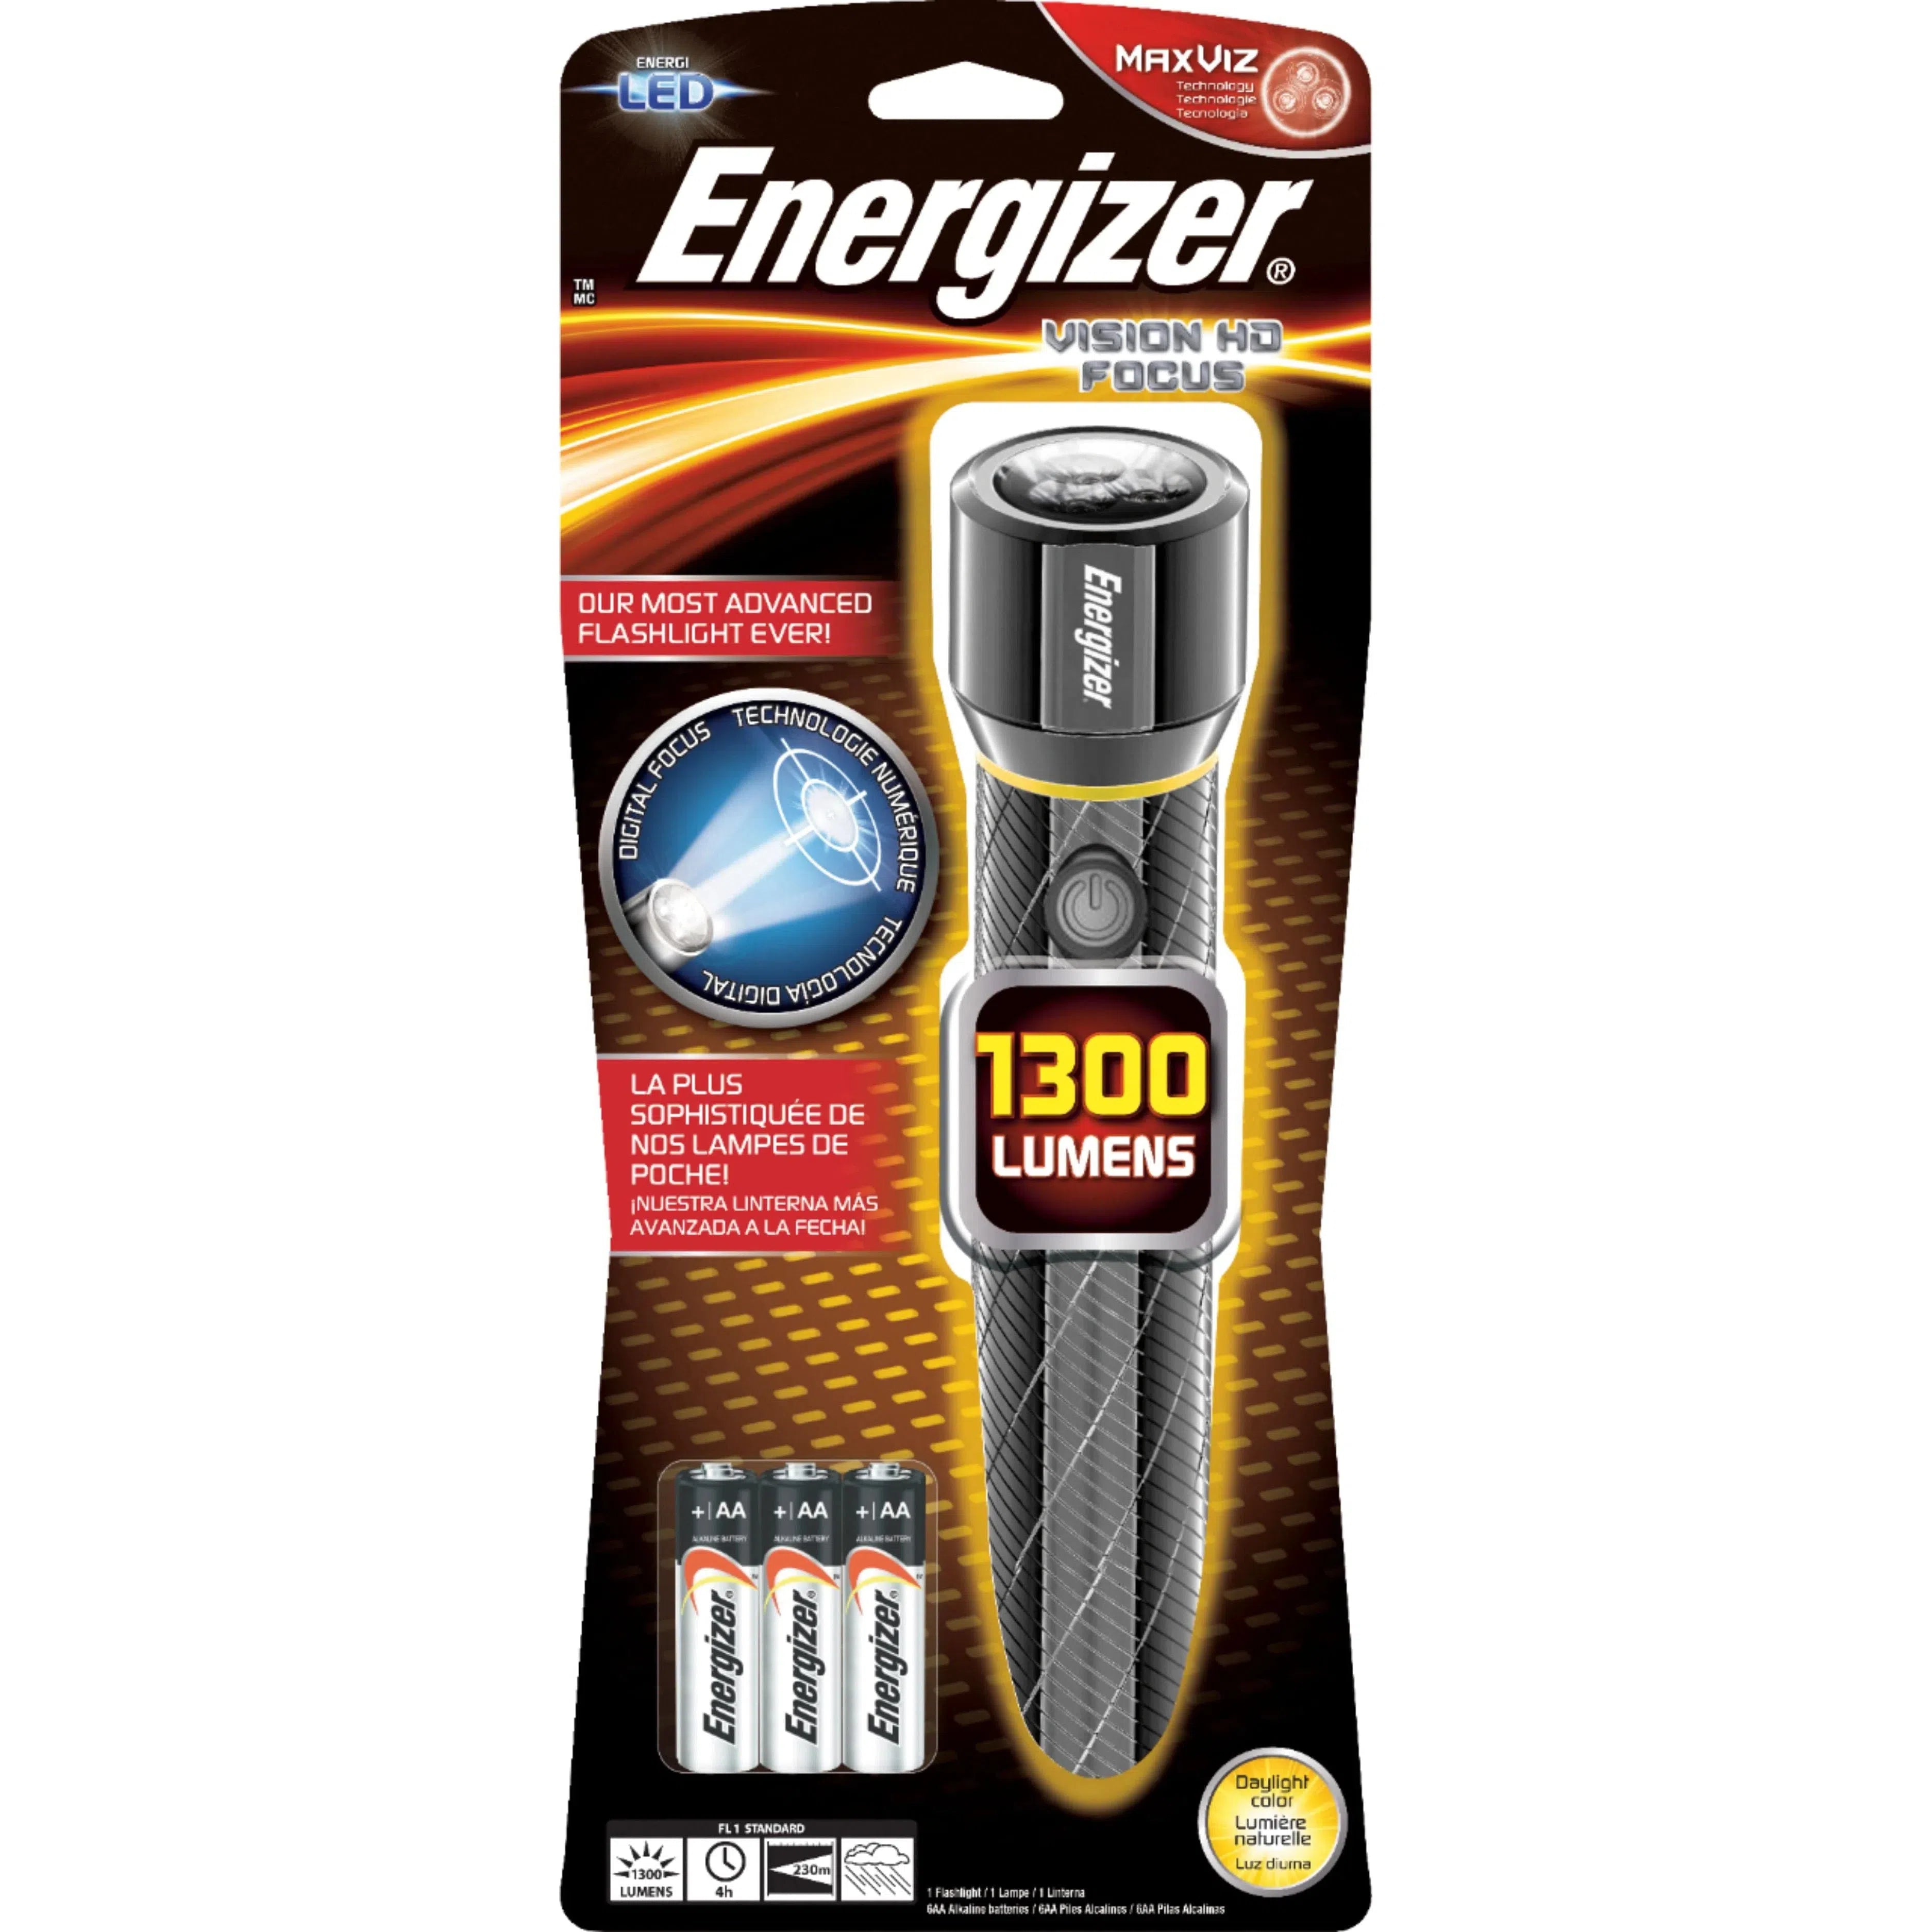 Energizer flashlight (6AA / 1300 lumens)